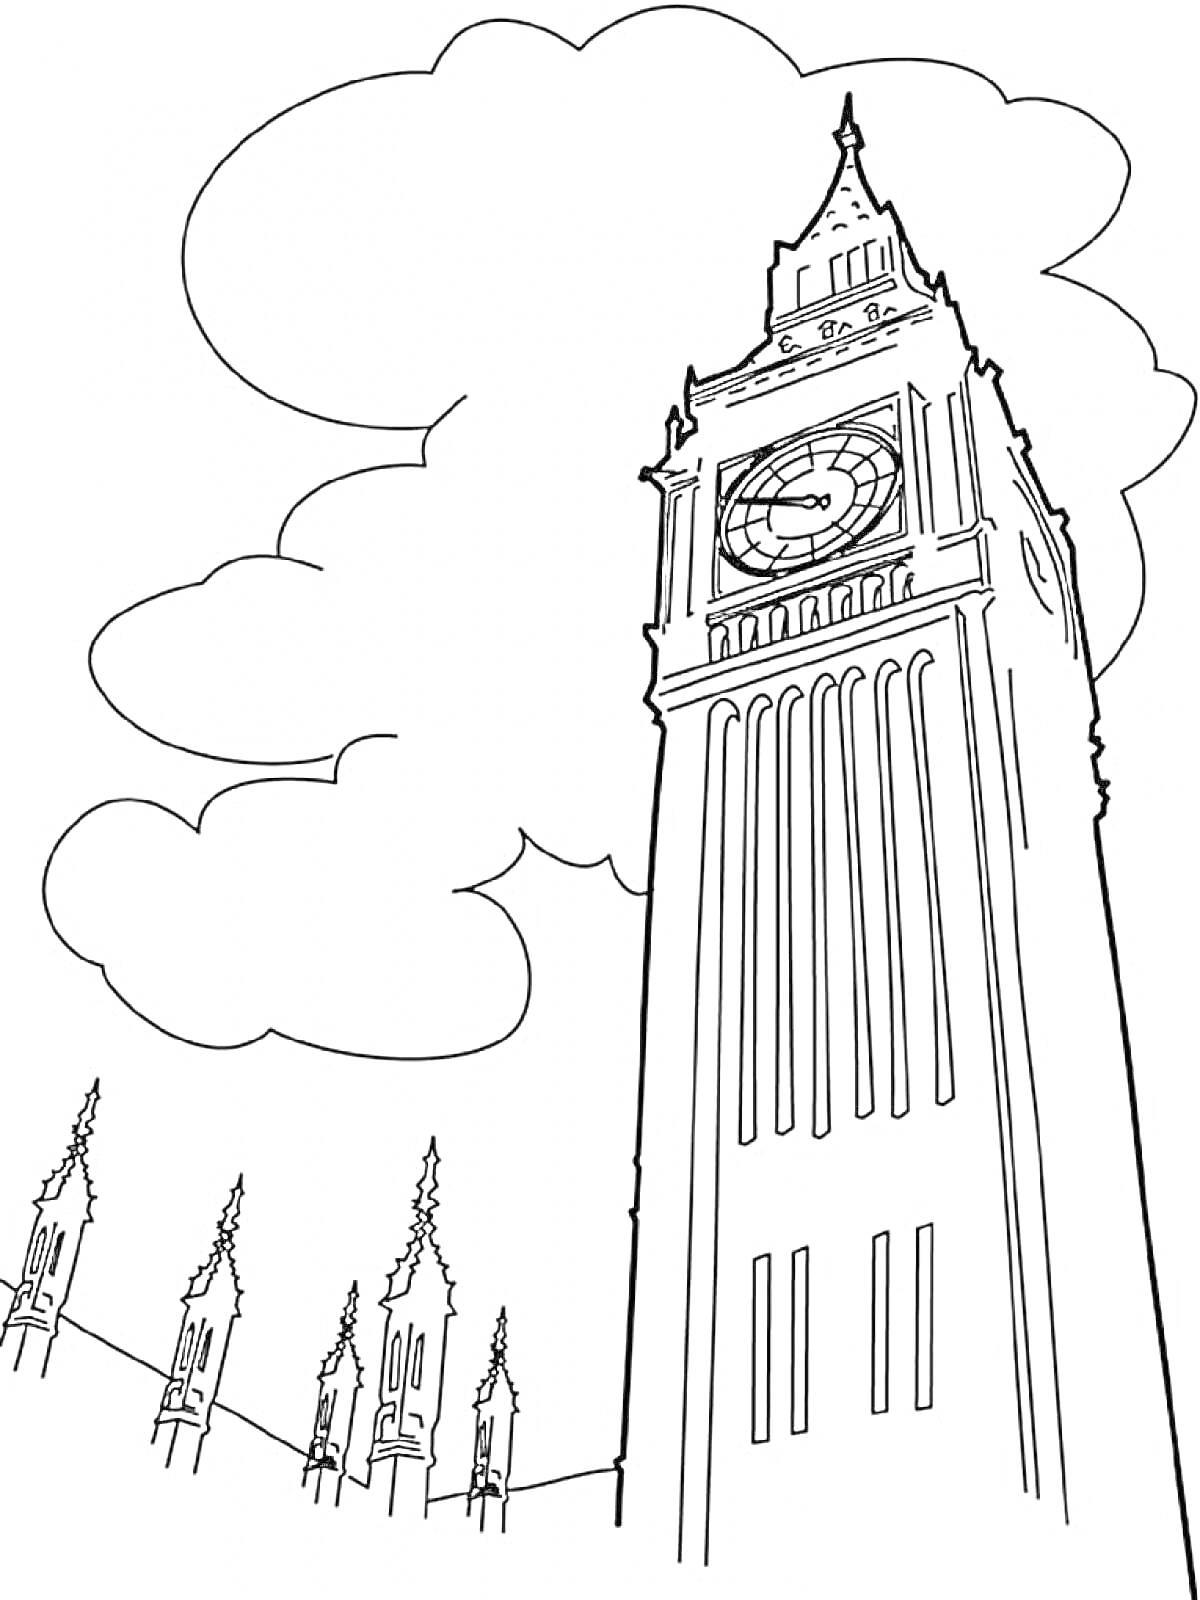 Раскраска Рисунок с изображением Биг-Бена и части здания парламента Великобритании на фоне облаков